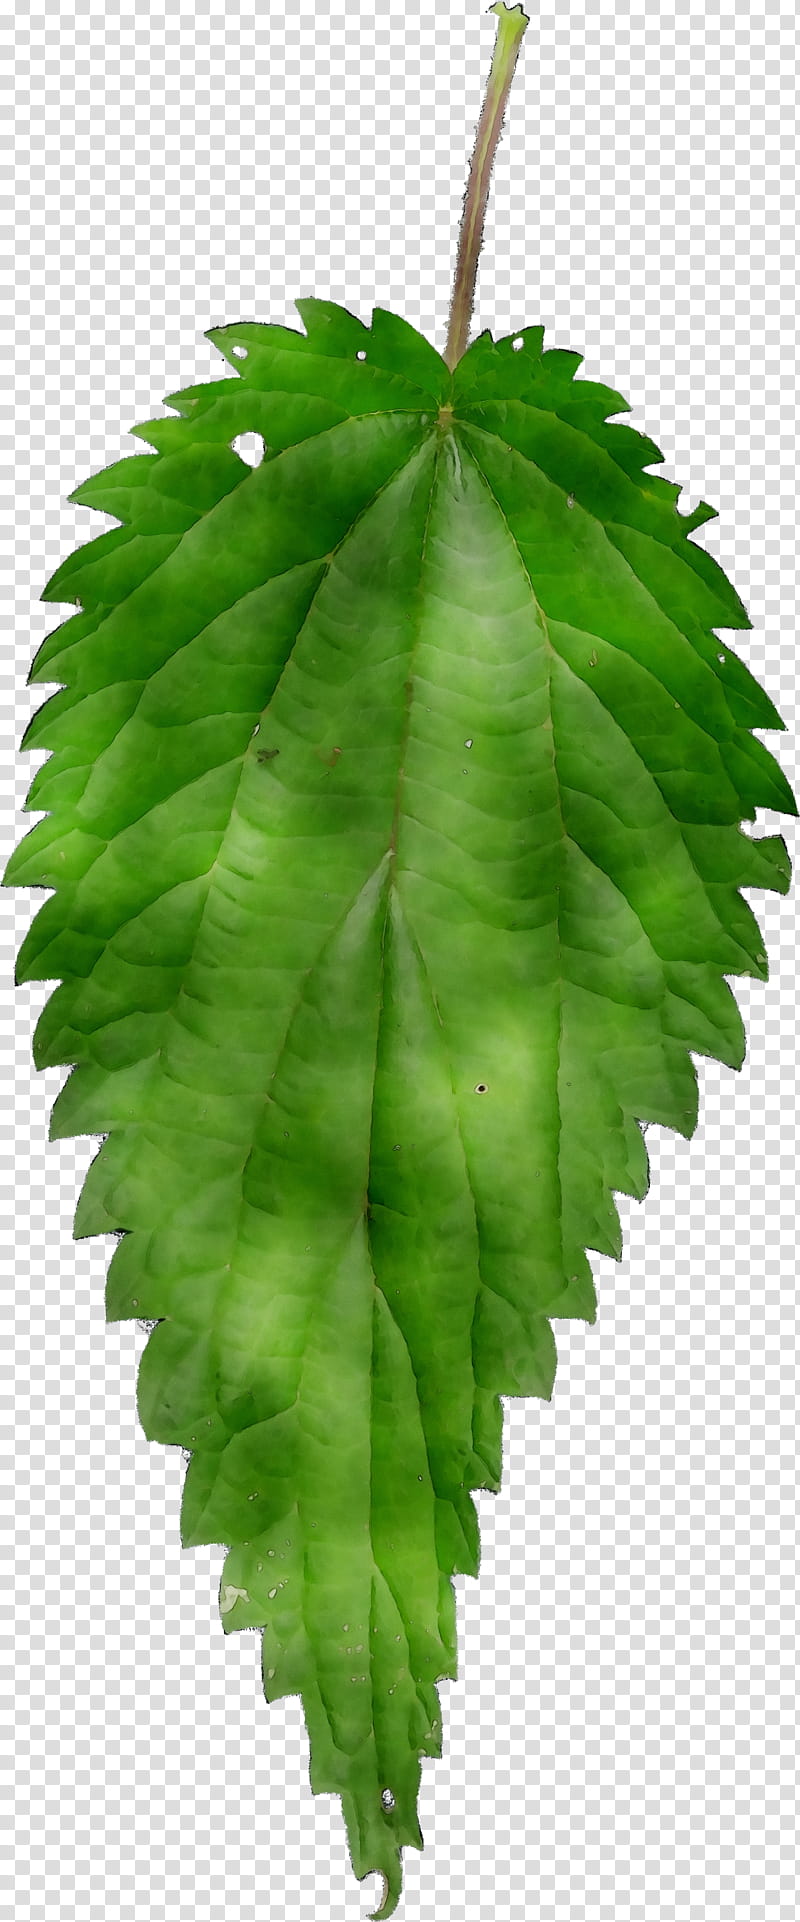 Hemp Leaf, Hole Saw, Drill Bit, Tree, Crown, Plants, Plant Stem, Millimeter transparent background PNG clipart